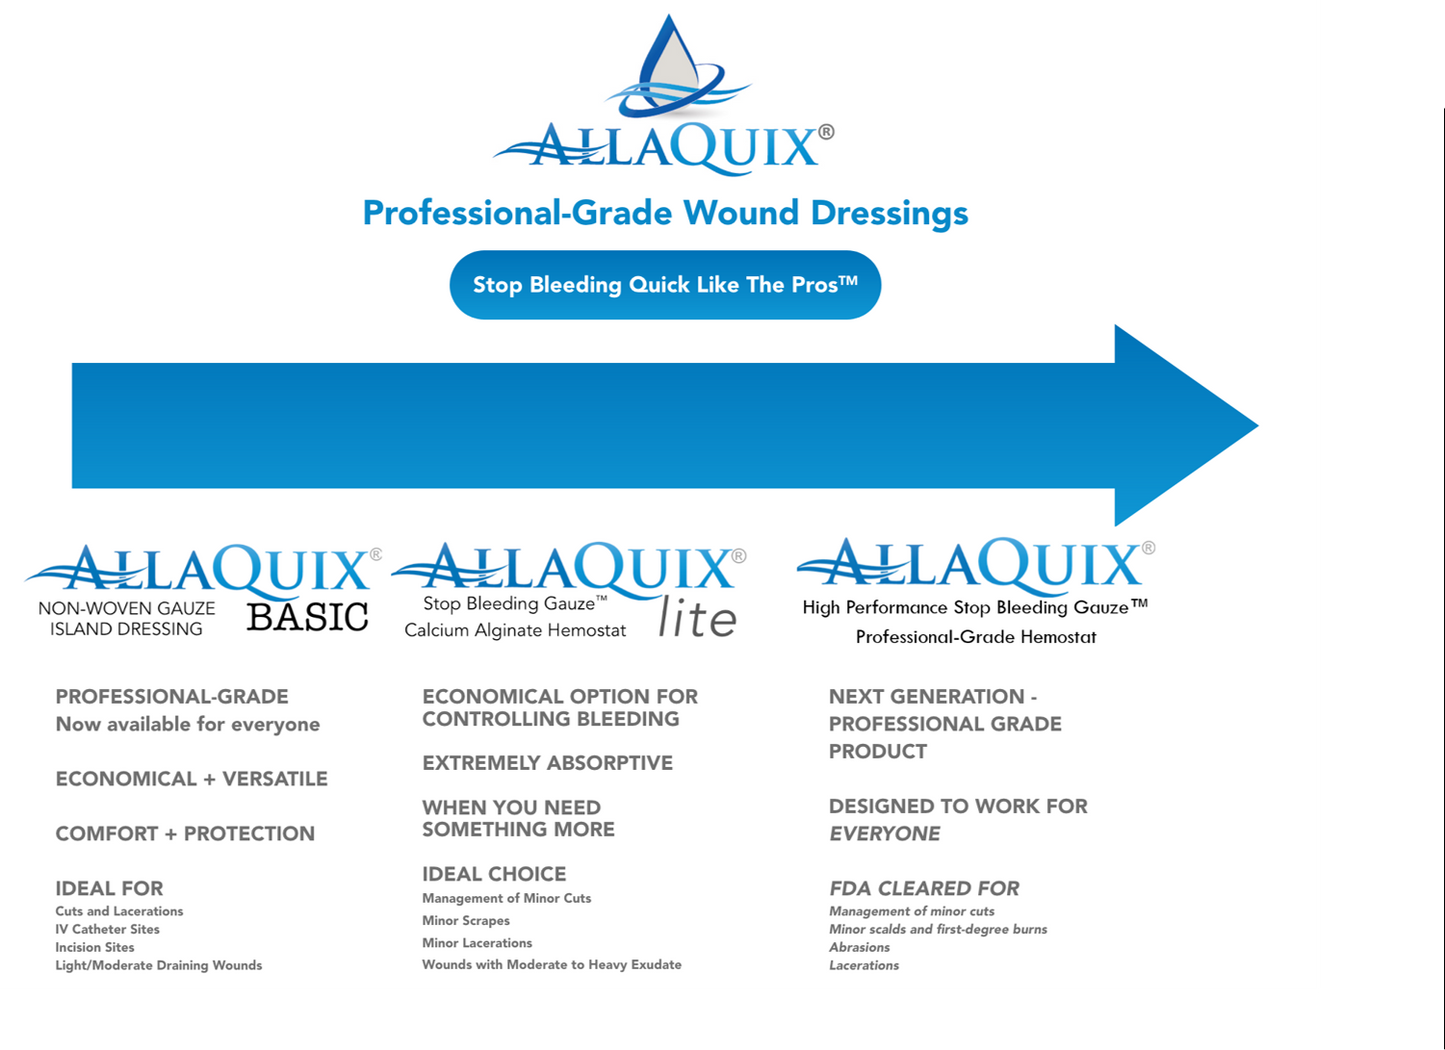 AllaQuix® Basic Non-Woven Sterile Gauze Island Dressing (4” x 4”)